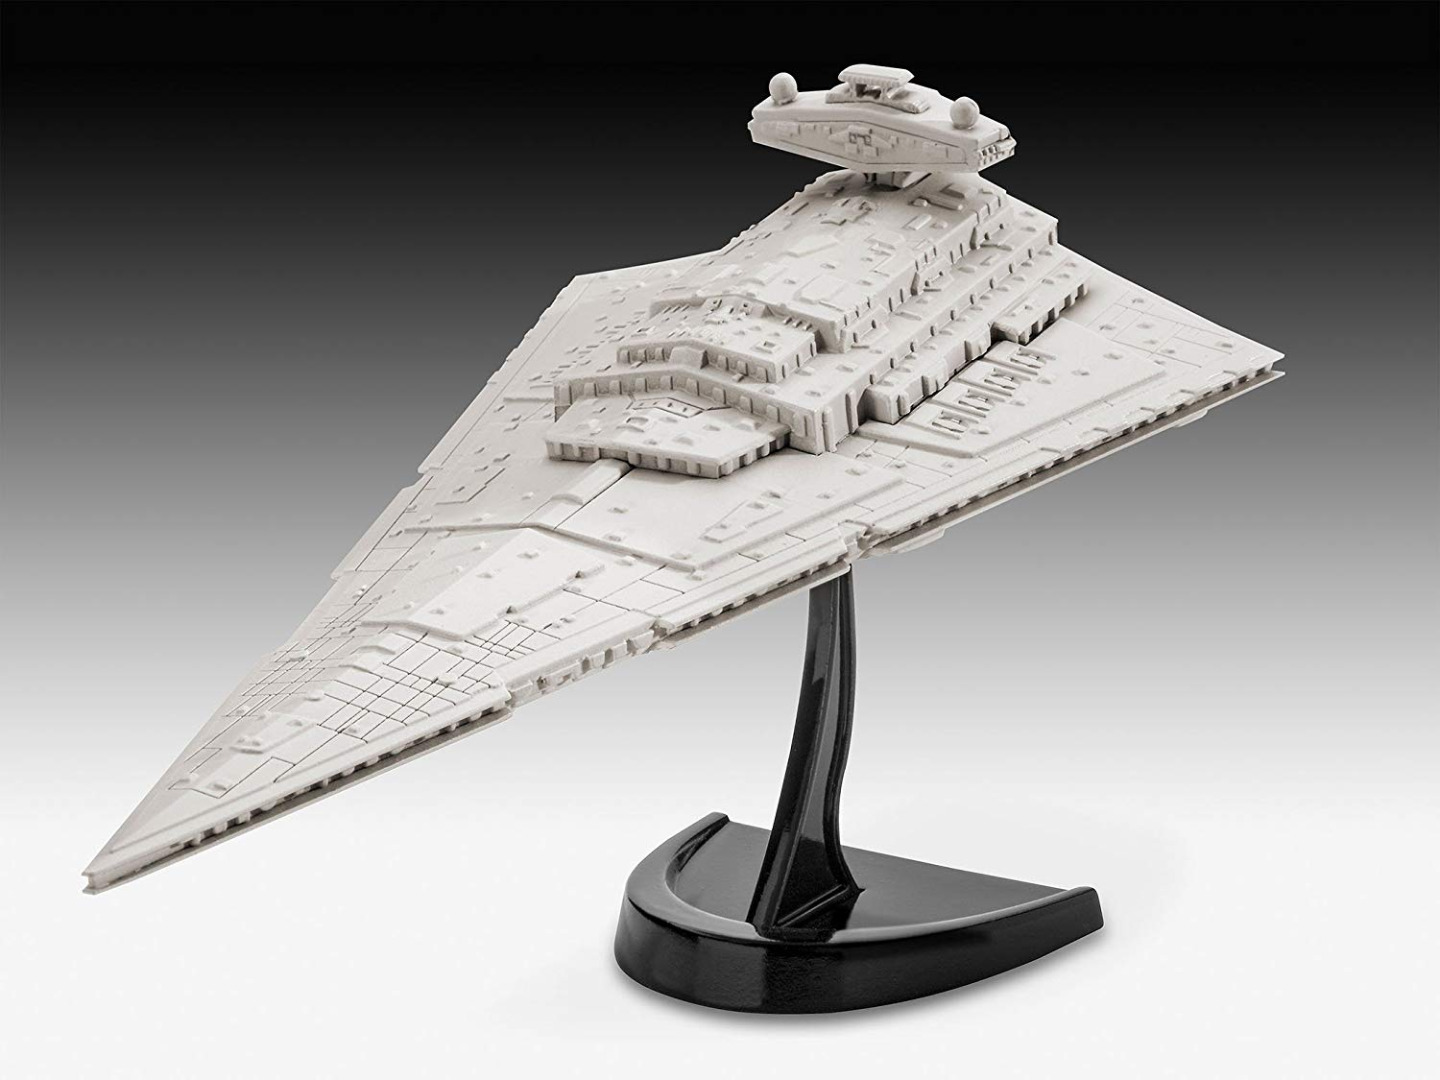 Revell Model Set Imperial Star Destroyer Scale 1:12300